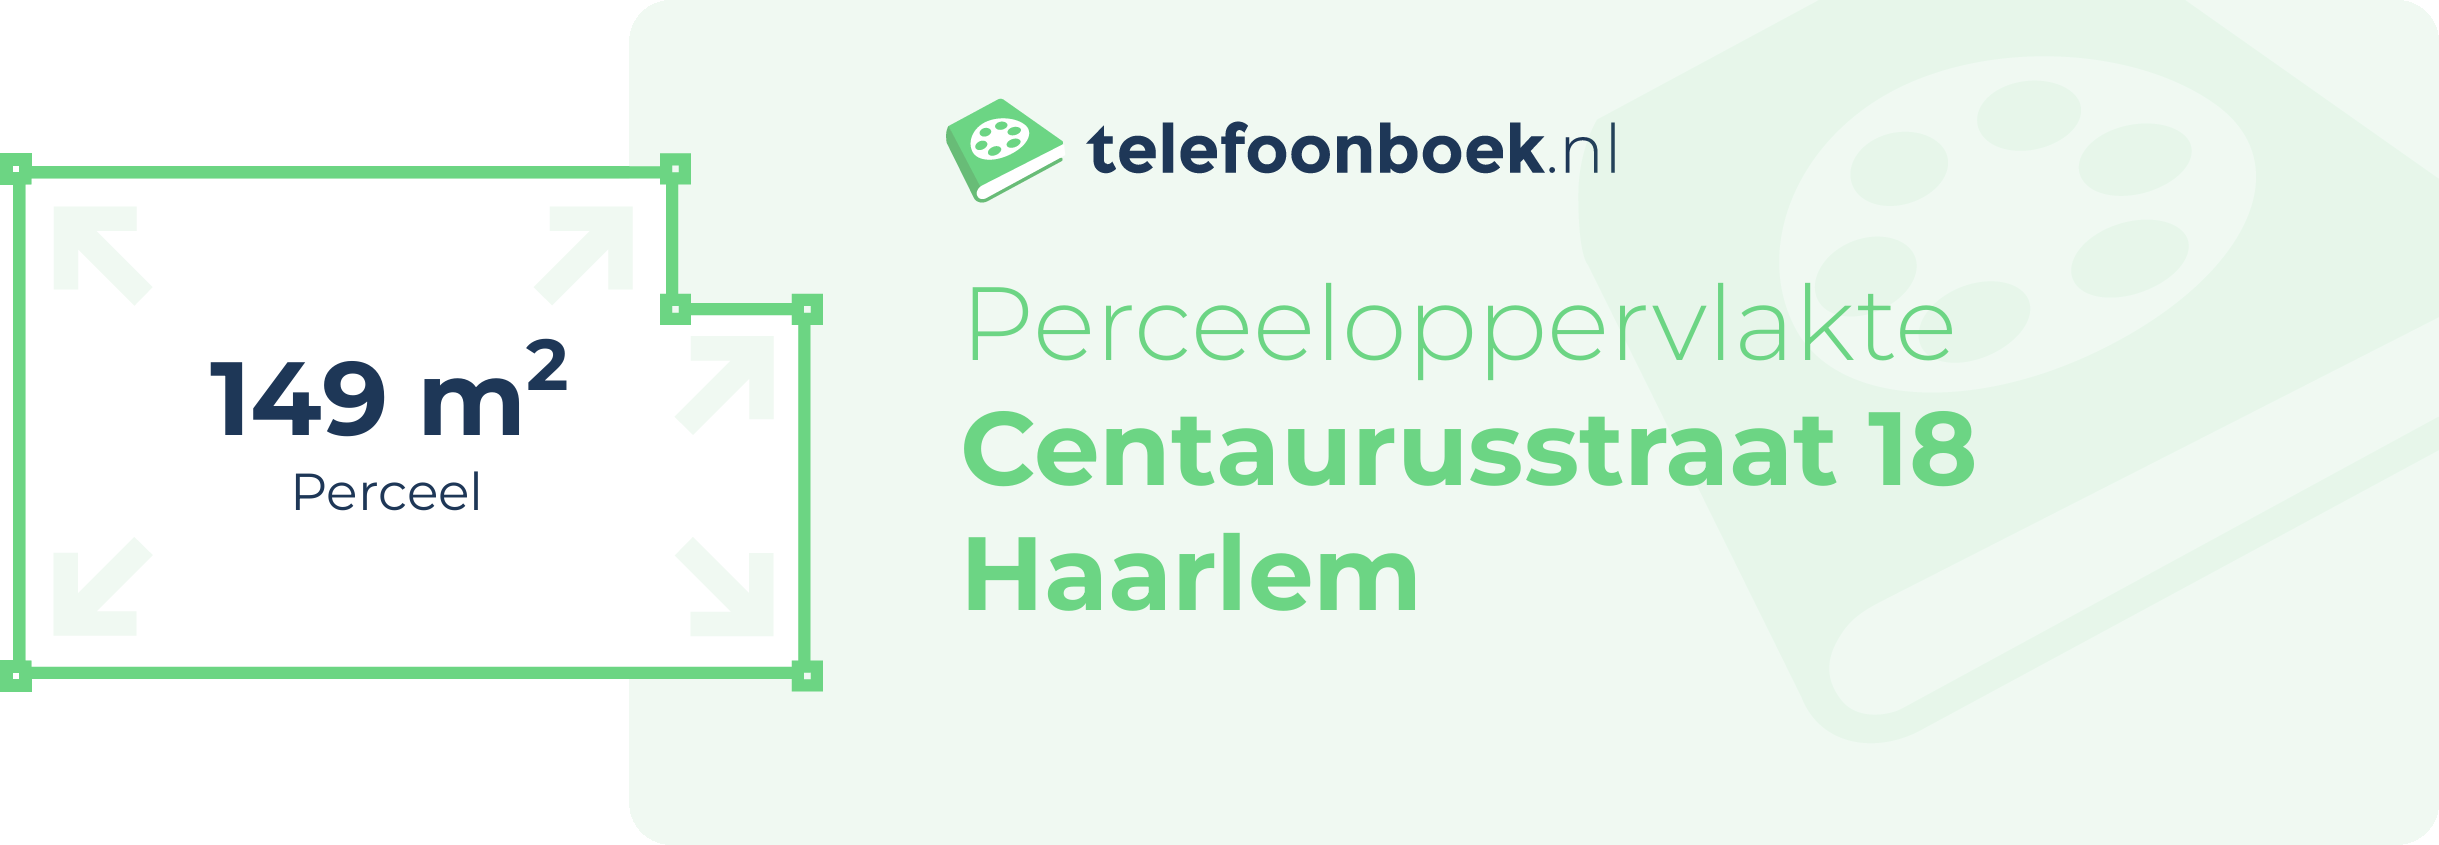 Perceeloppervlakte Centaurusstraat 18 Haarlem